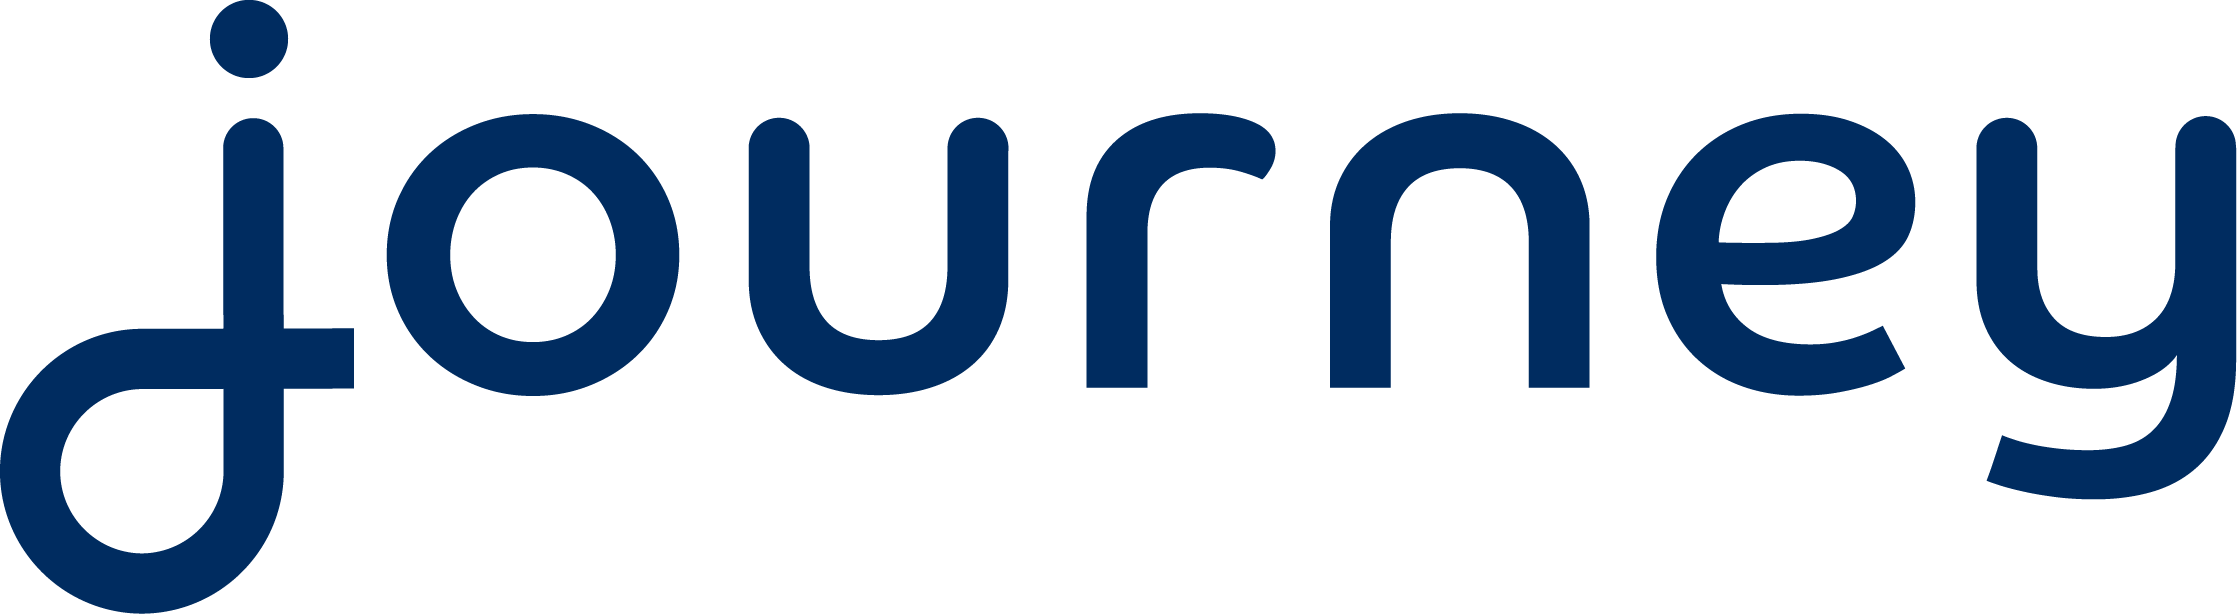 Journey logo